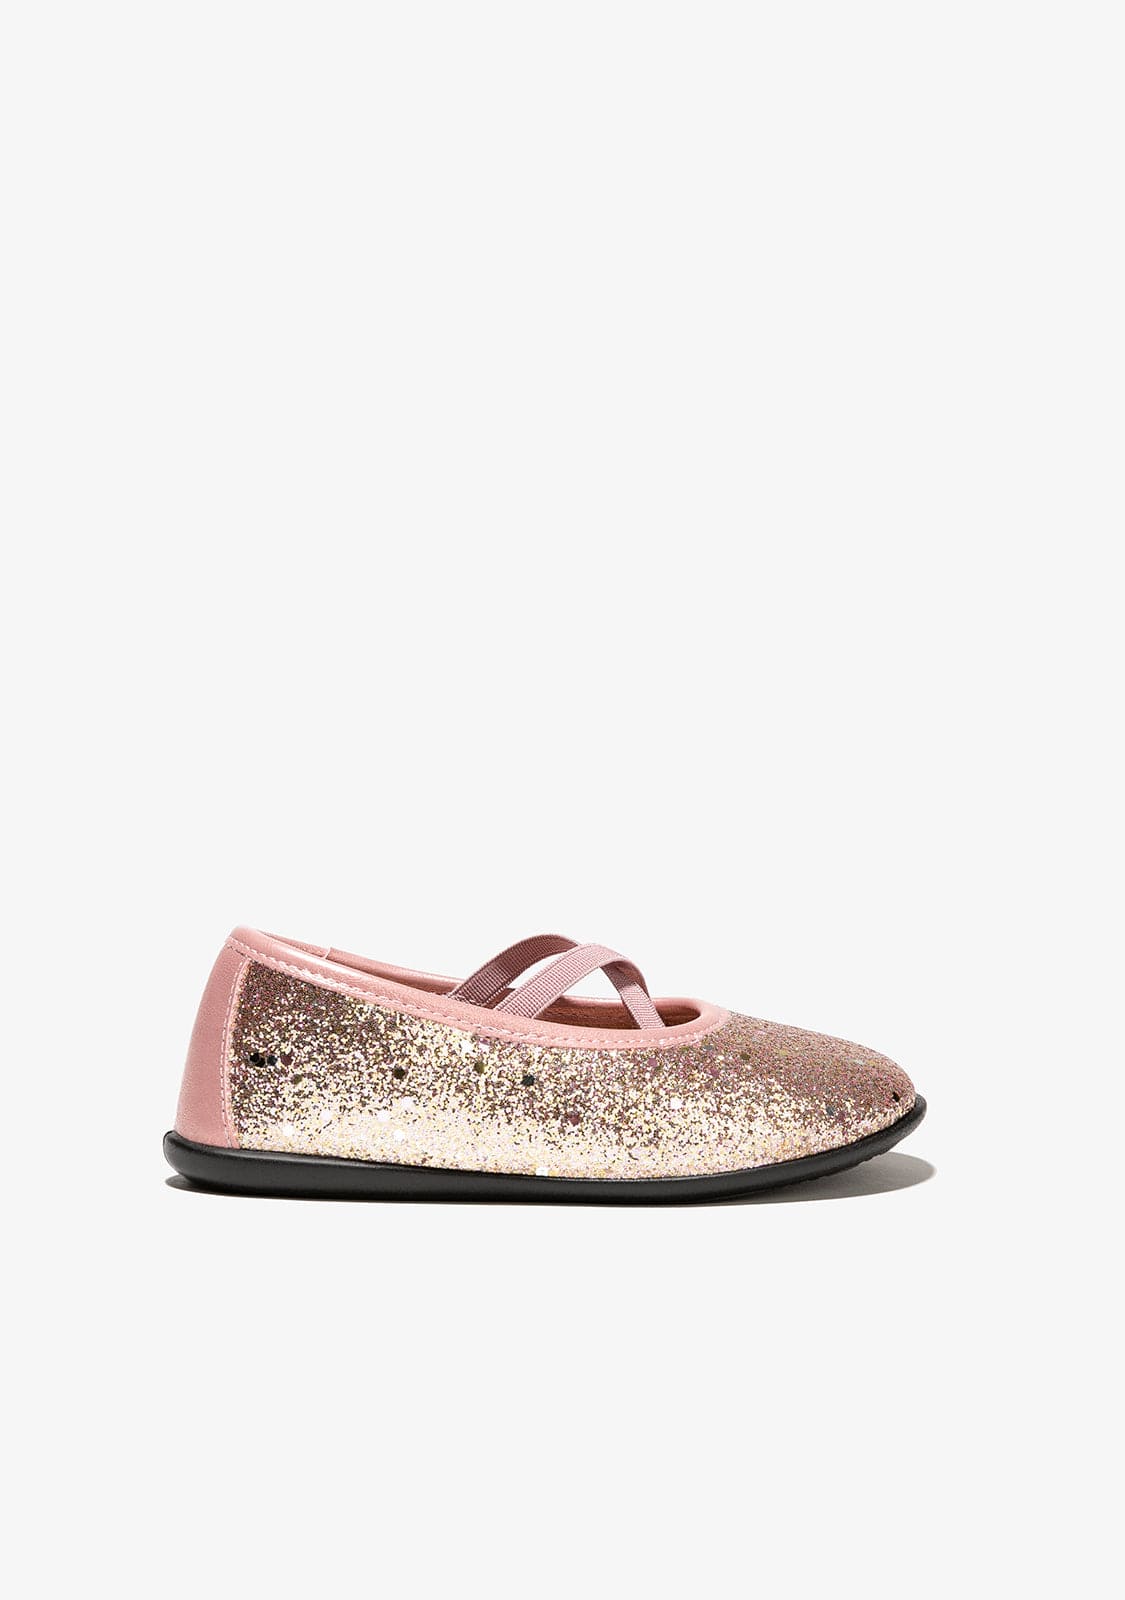 CONGUITOS Shoes Girl's Pink Glitter Straps Ballerinas